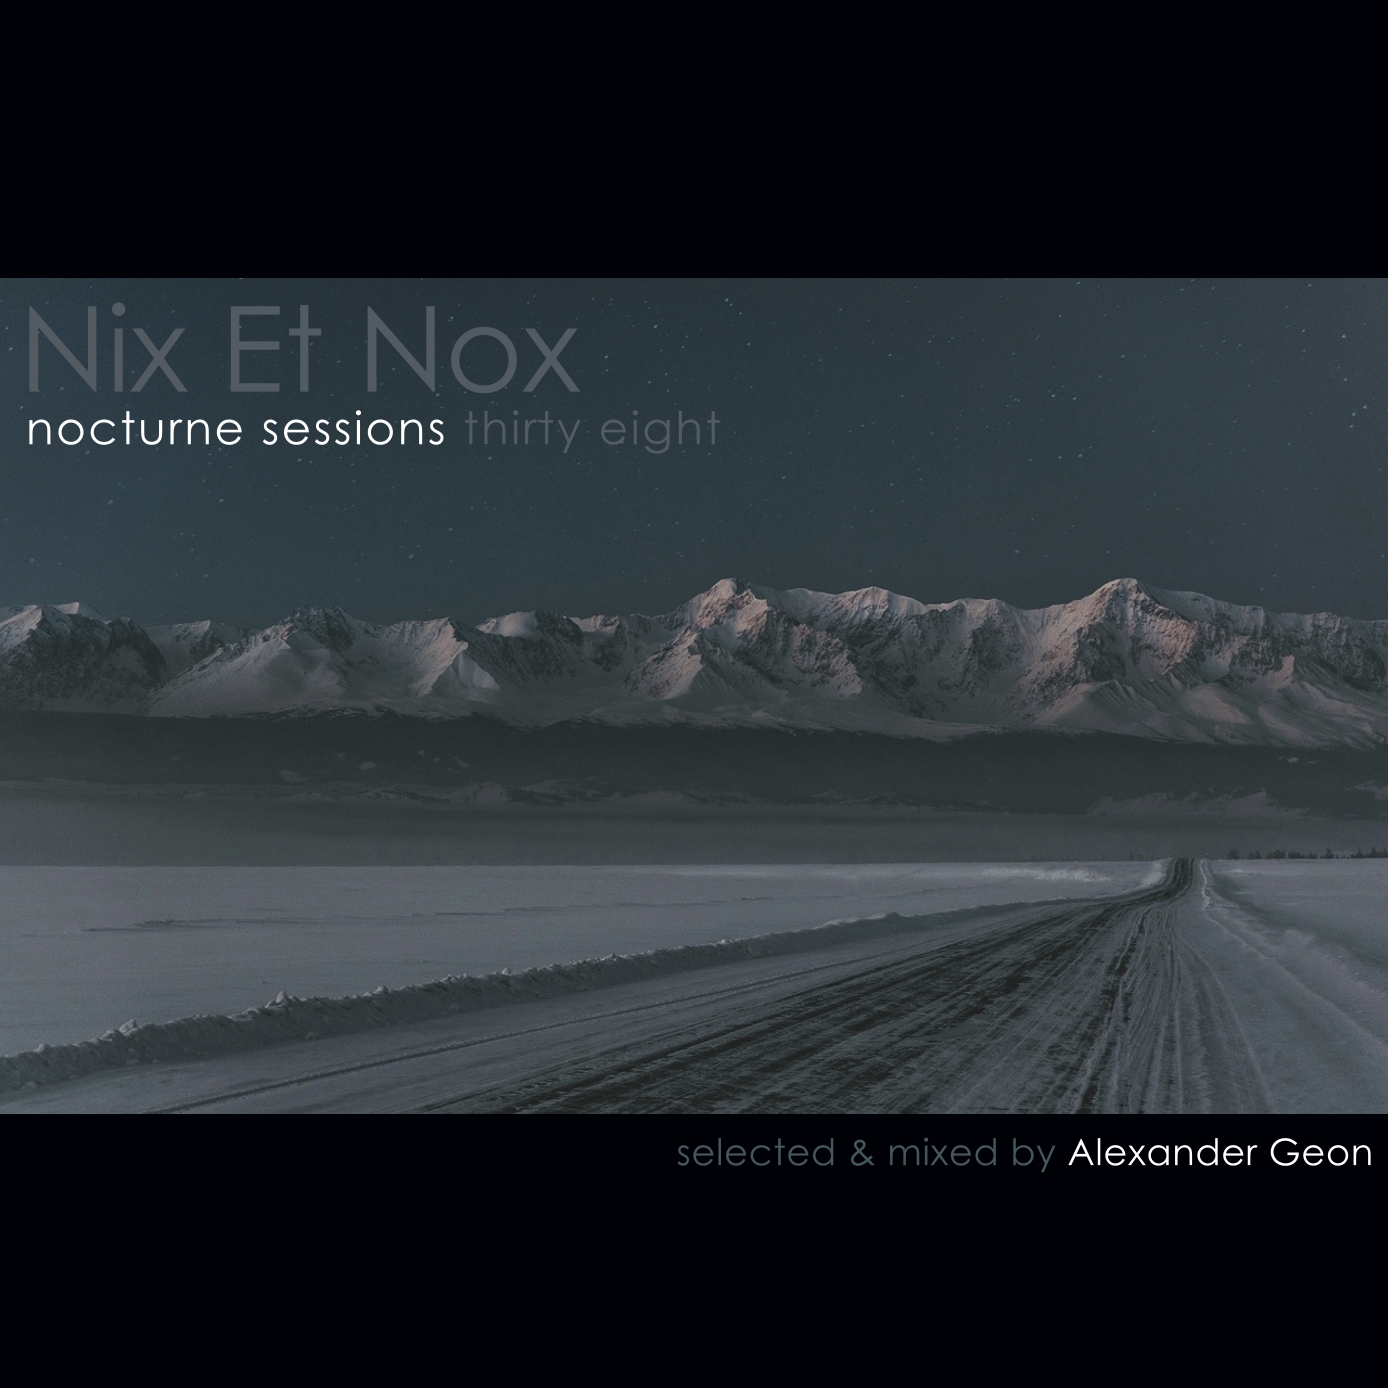 Nix Et Nox (nocturne sessions) by Alexander Geon